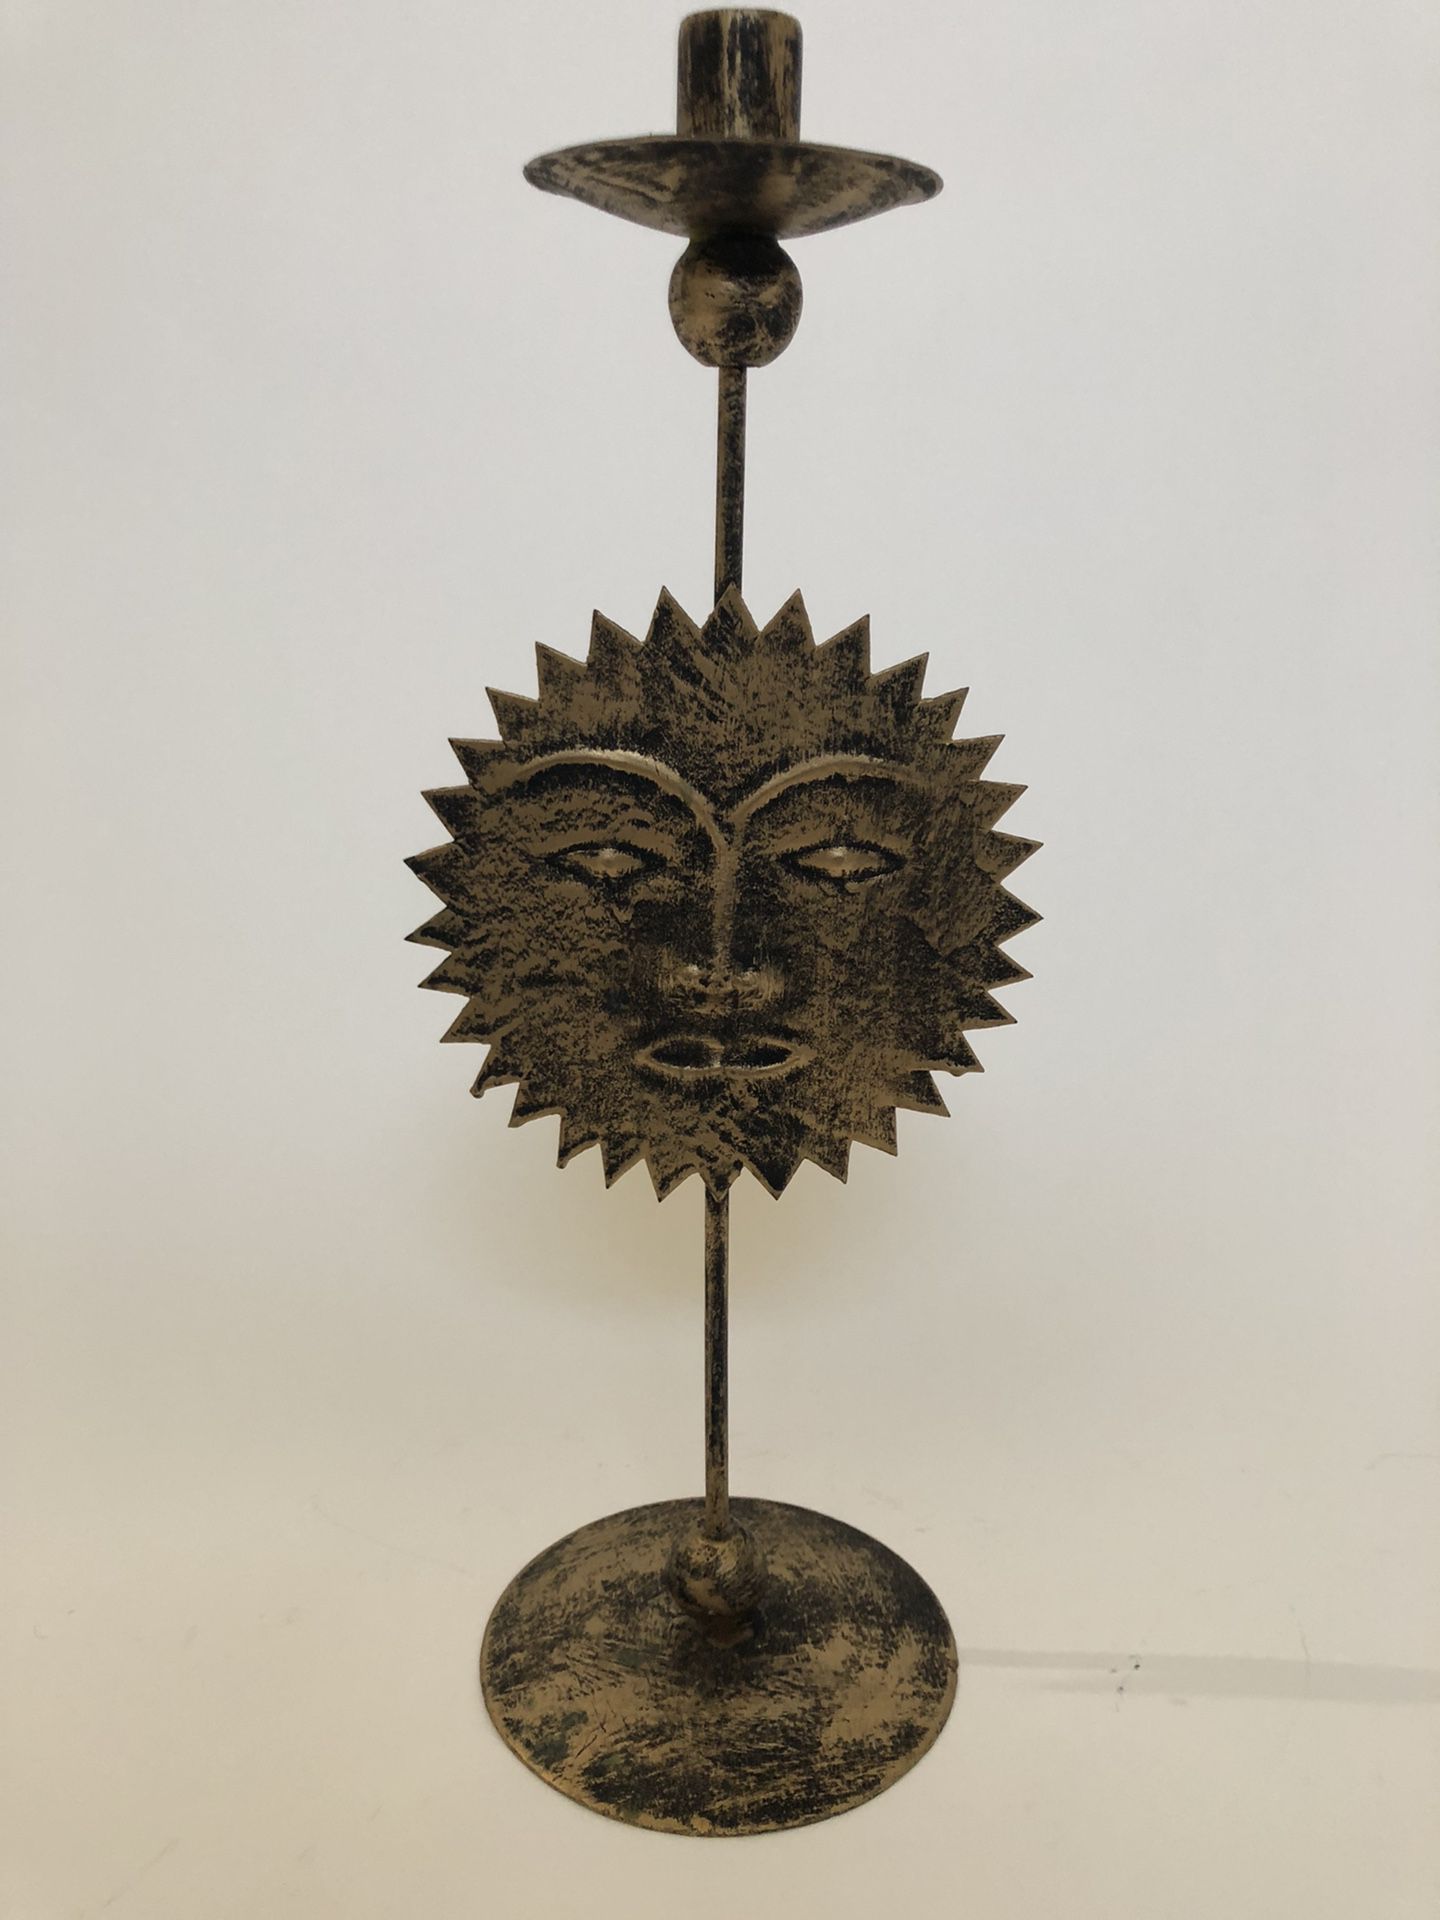 Celestial Antique Bronze Metal Sun Handcrafted Candle Stick Holder Home Decor 